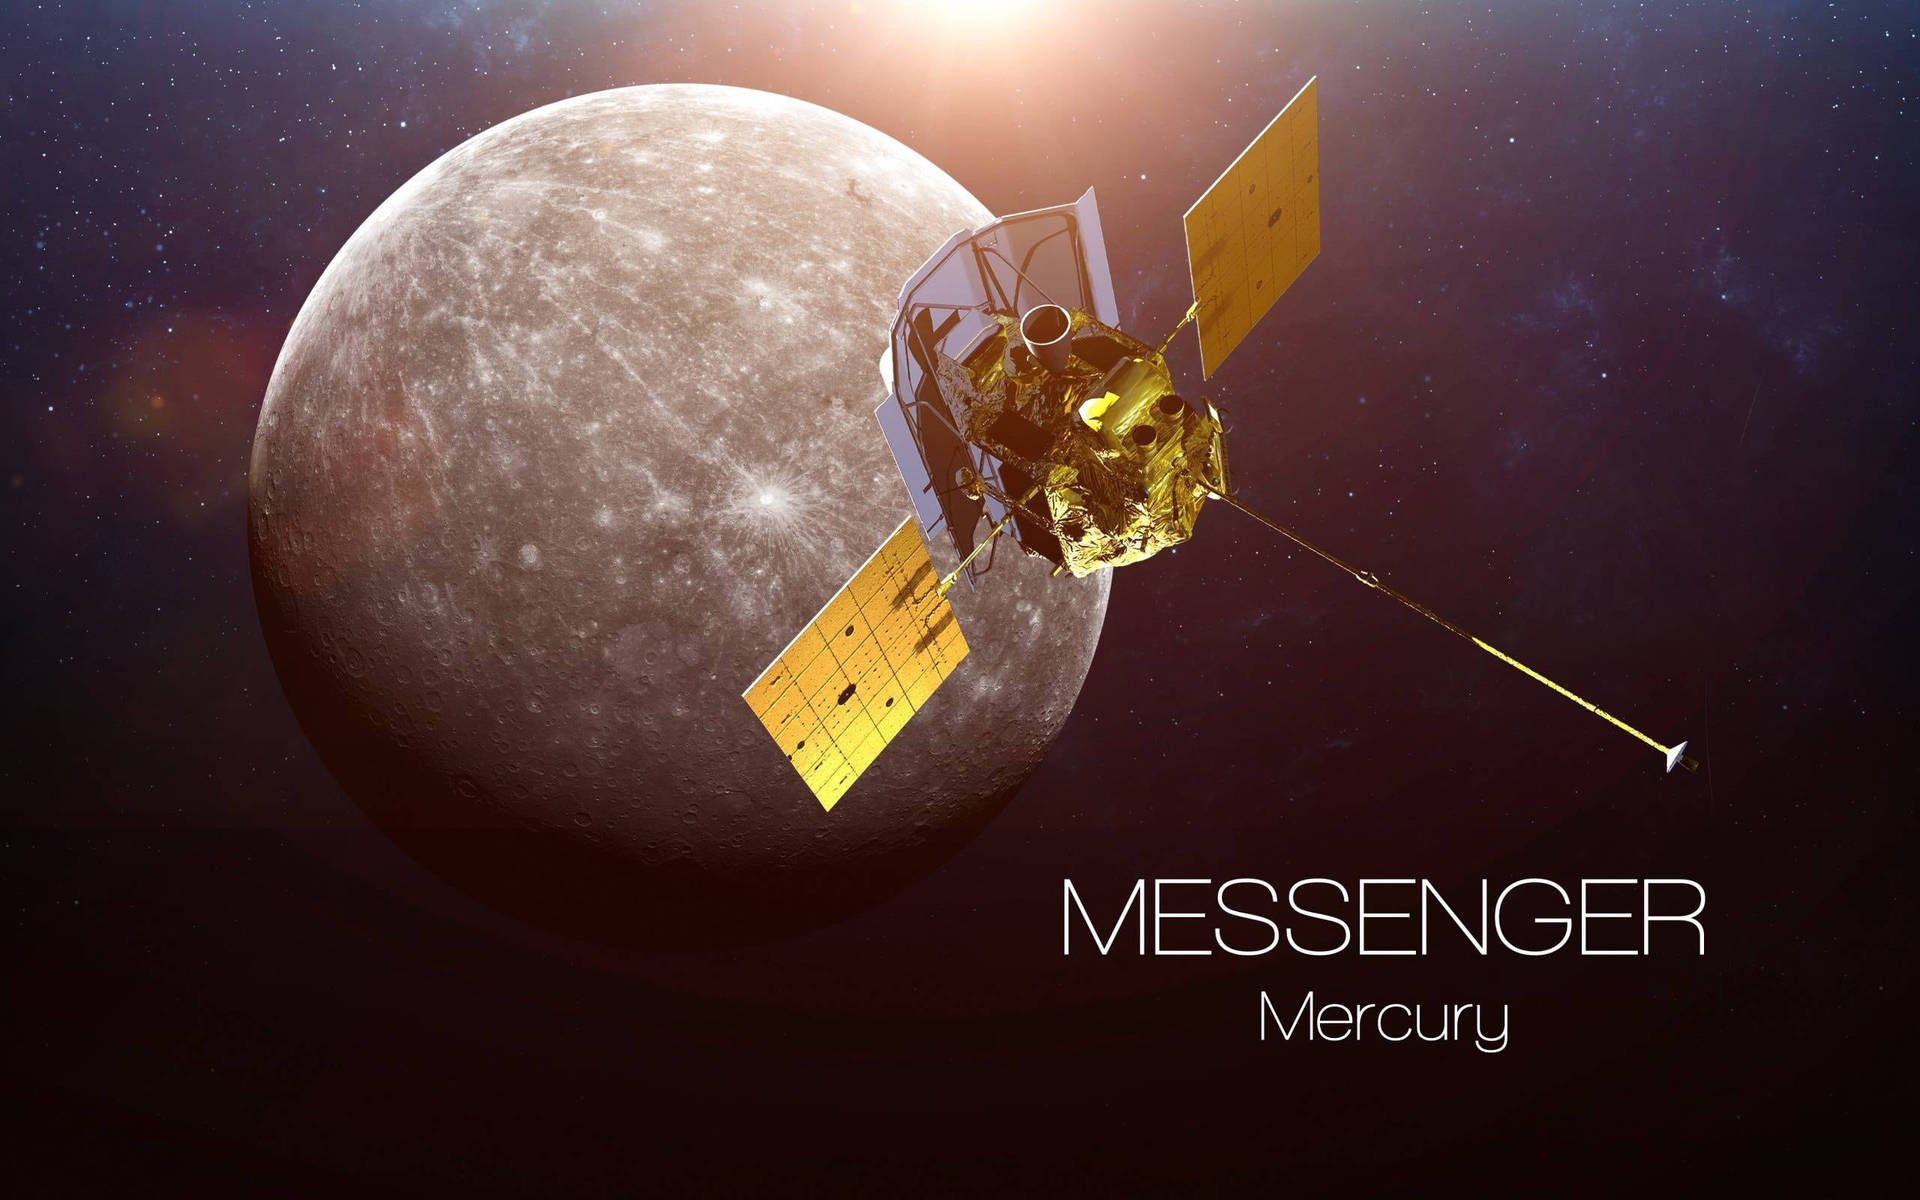 Messengersatellit Merkur Wallpaper